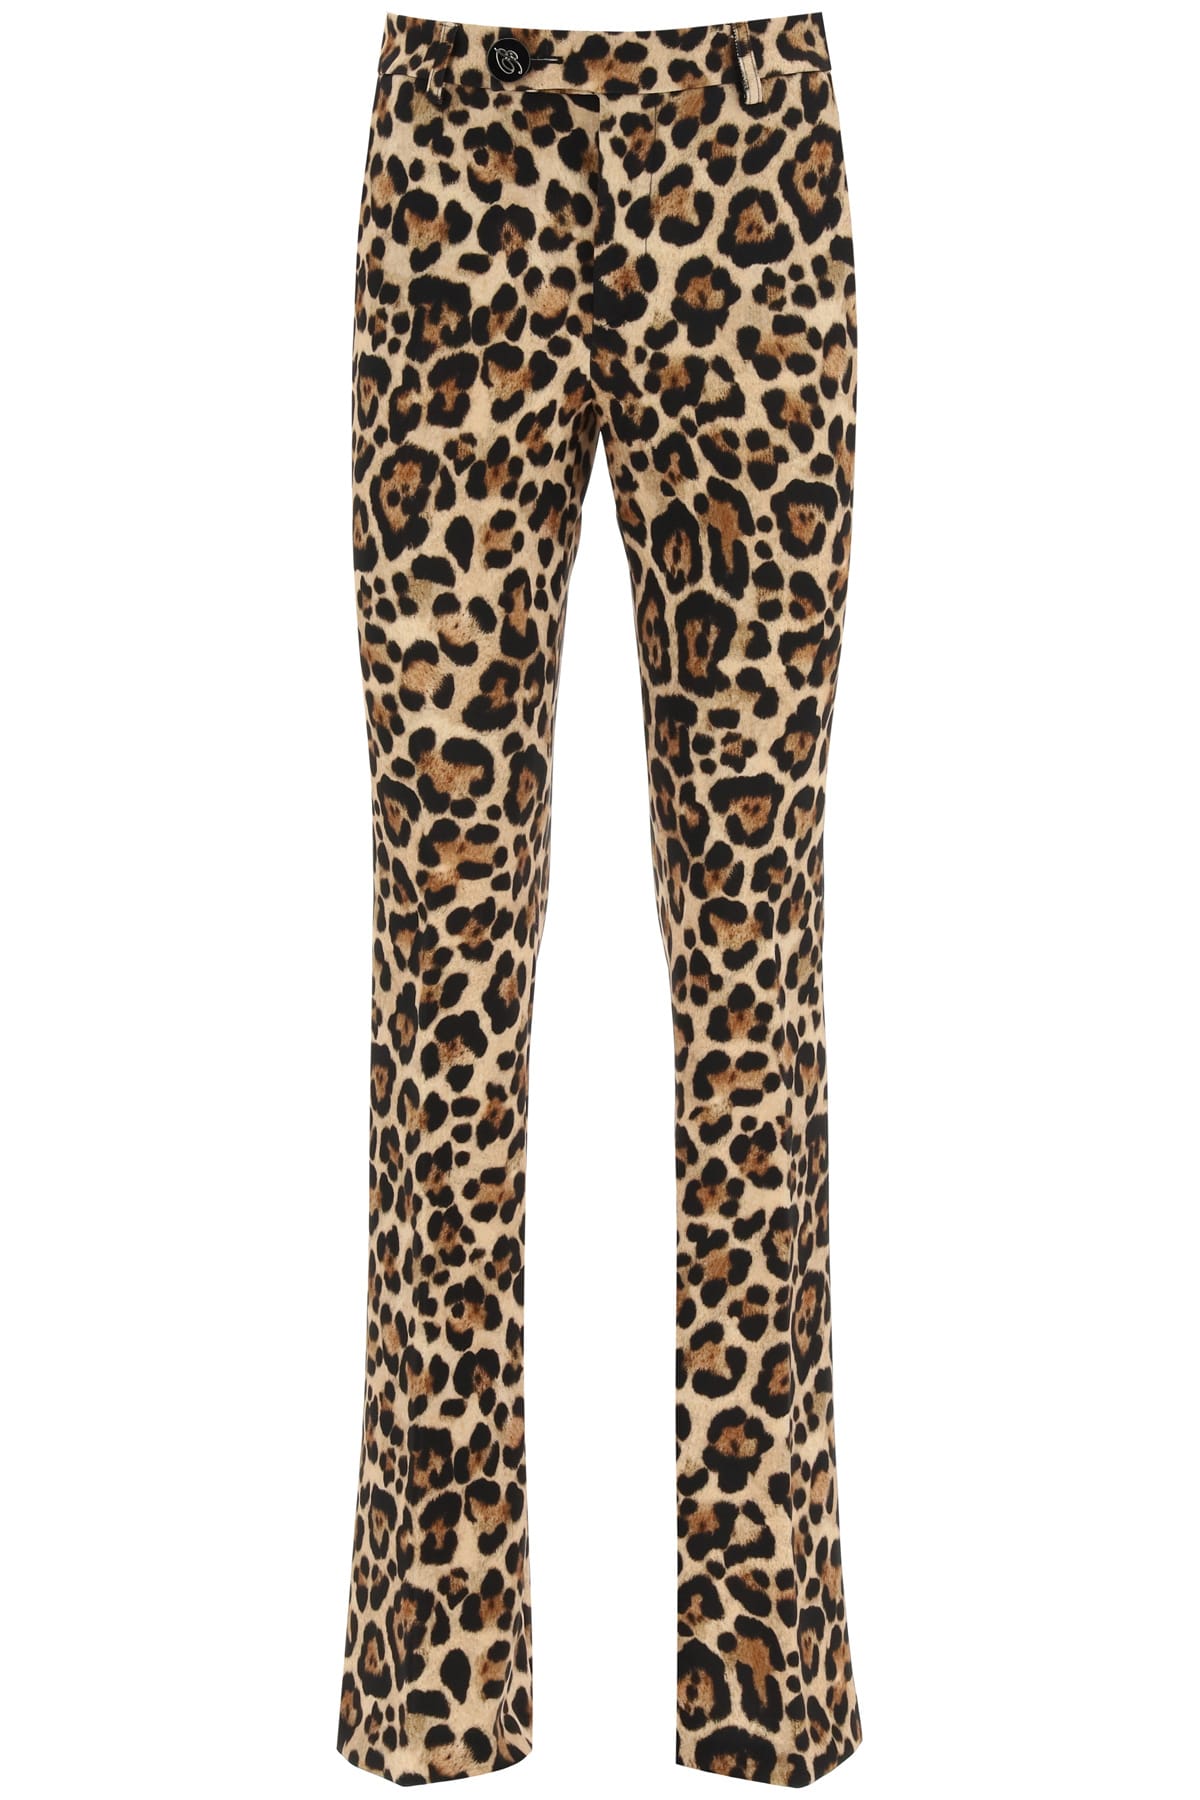 Blumarine Leopard Print Flare Trousers